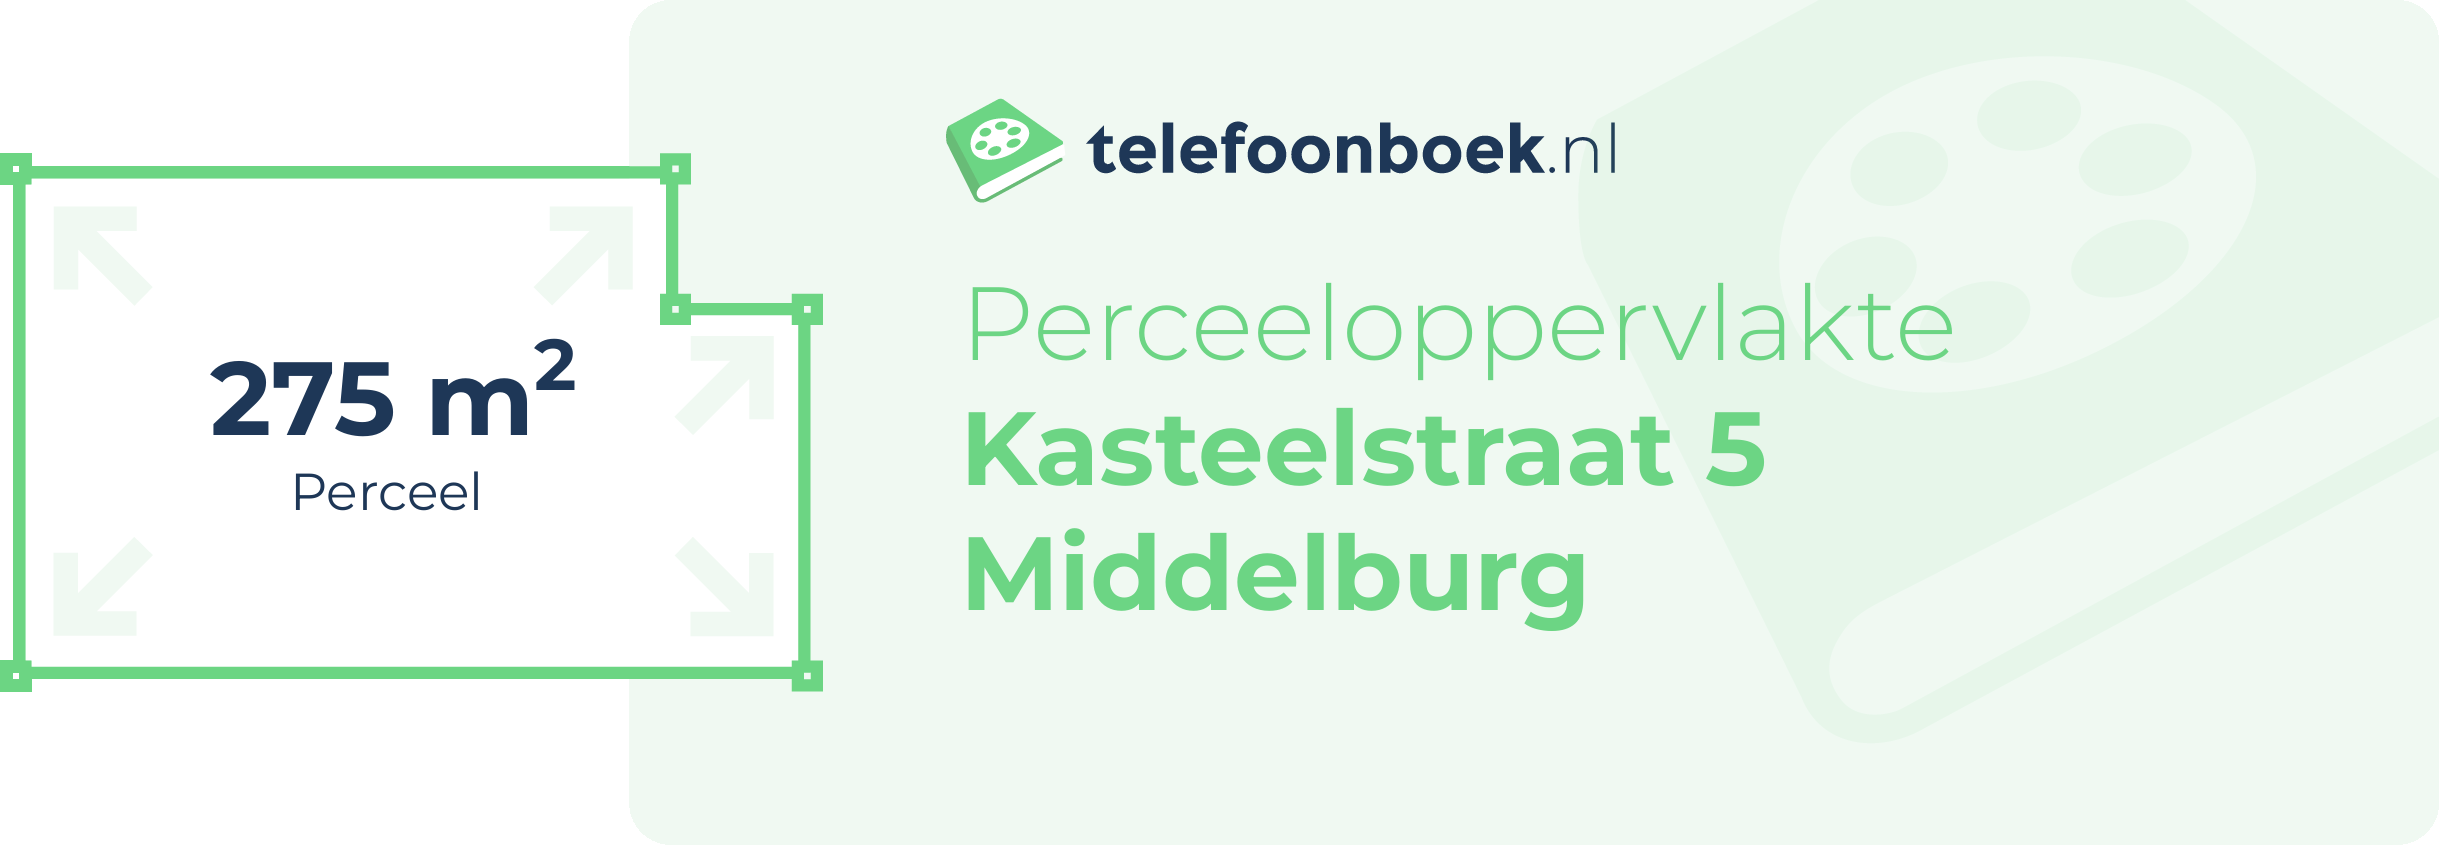 Perceeloppervlakte Kasteelstraat 5 Middelburg